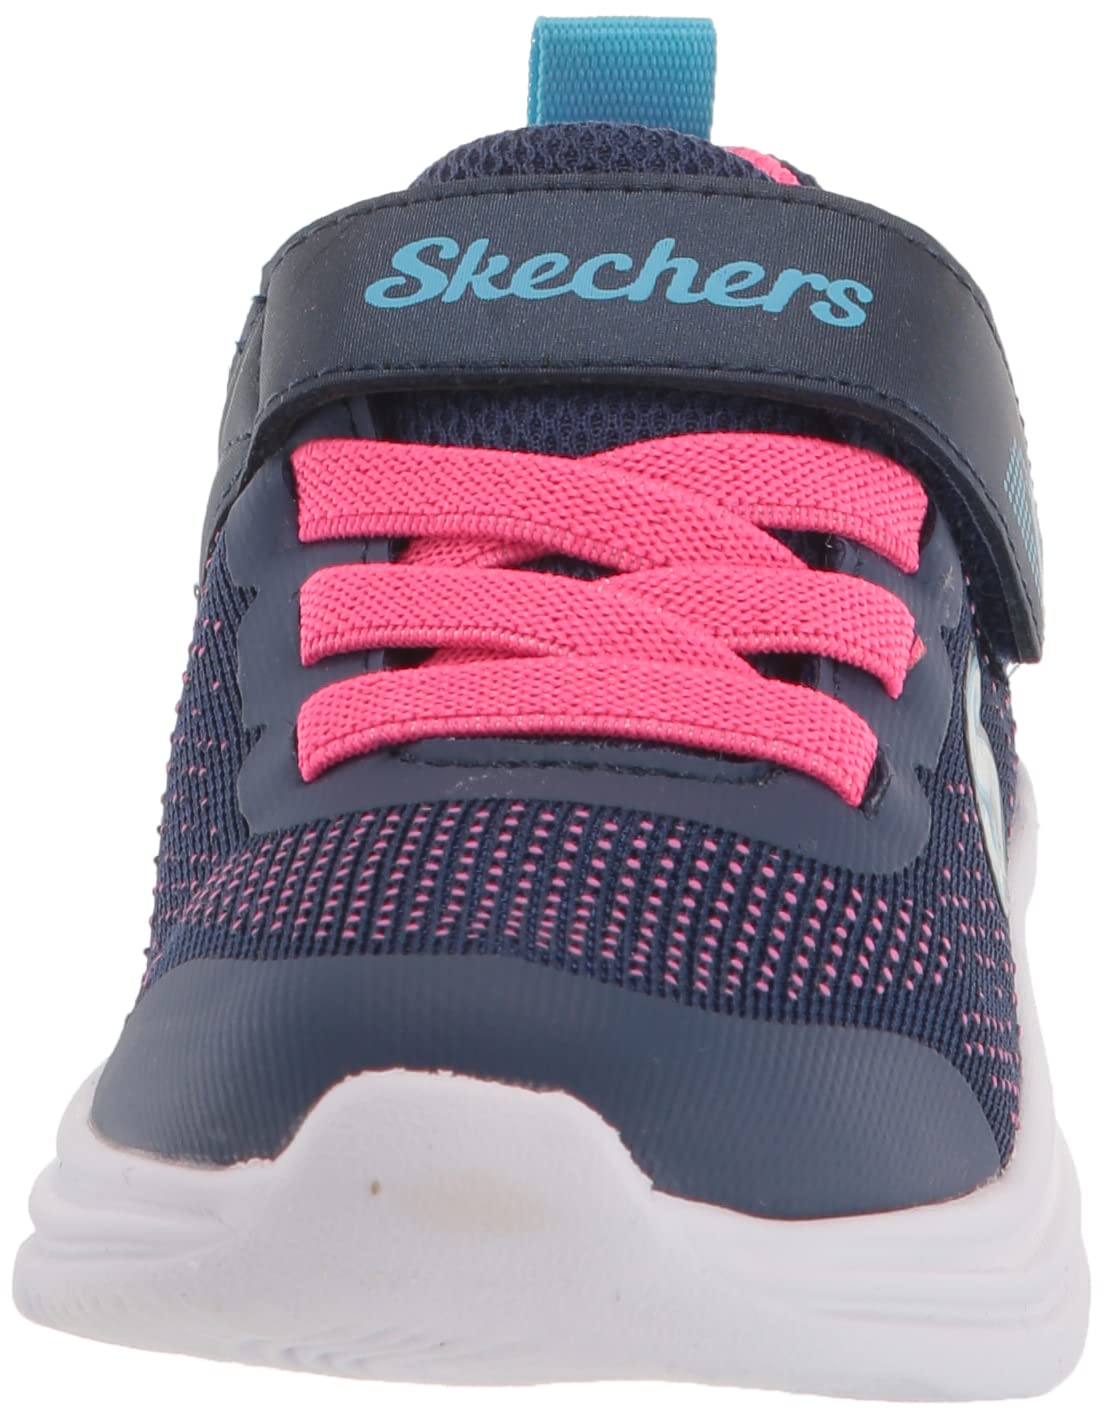 Skechers Unisex-Child Dreamy Dancer-Radiant Rogue Sneaker